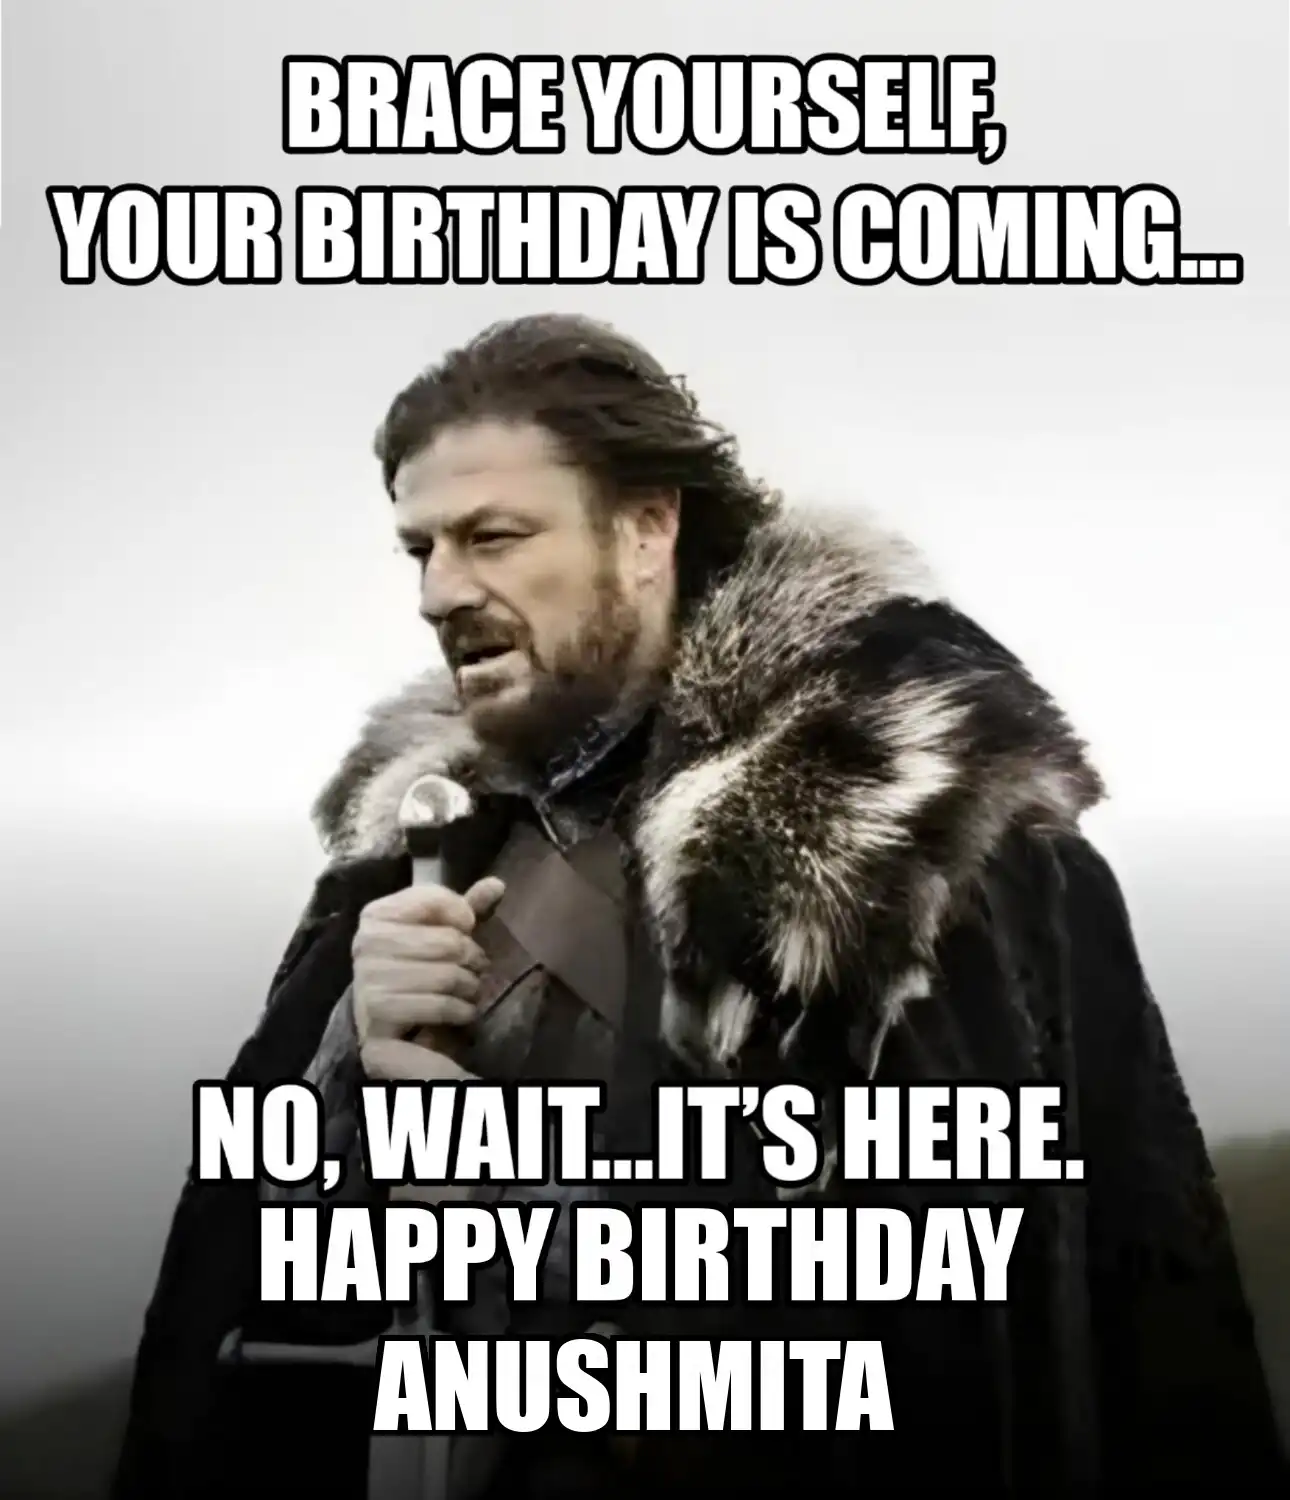 Happy Birthday Anushmita Brace Yourself Your Birthday Is Coming Meme